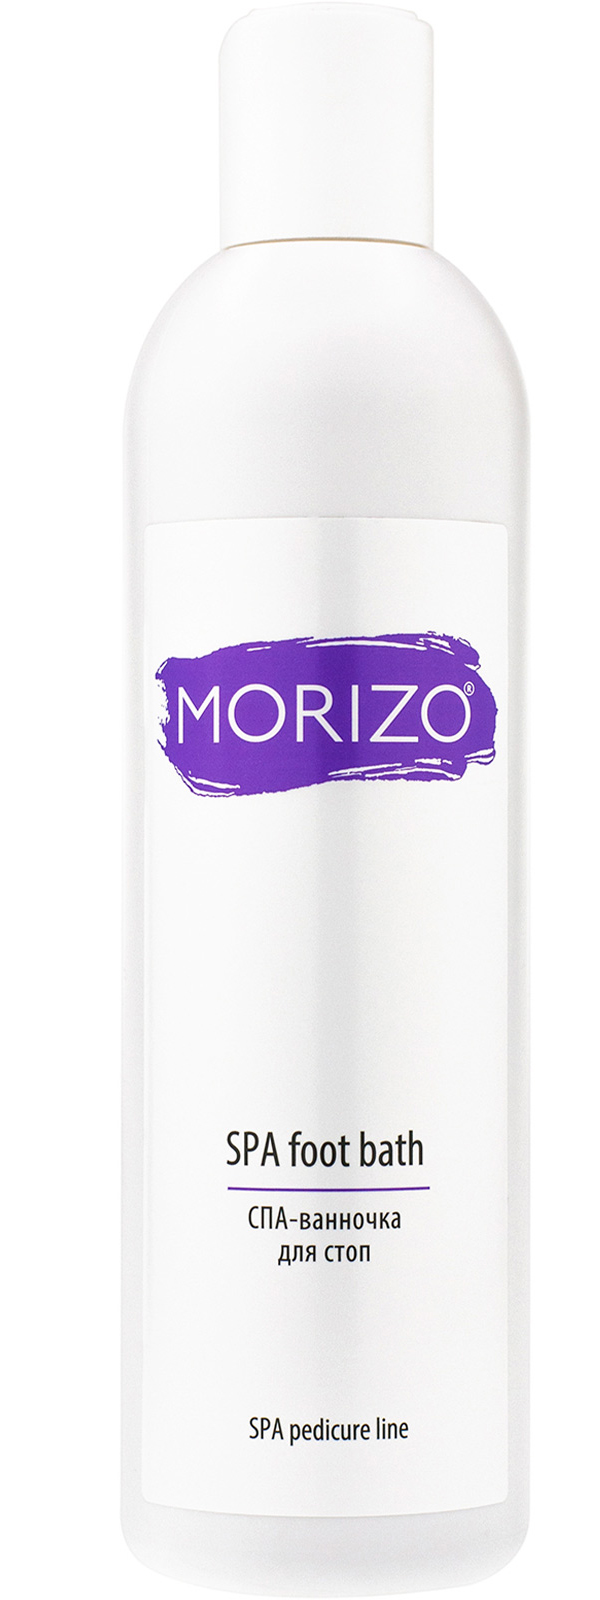 Morizo СПА - ванночка для стоп, 300 мл (Morizo, Pedicure lin